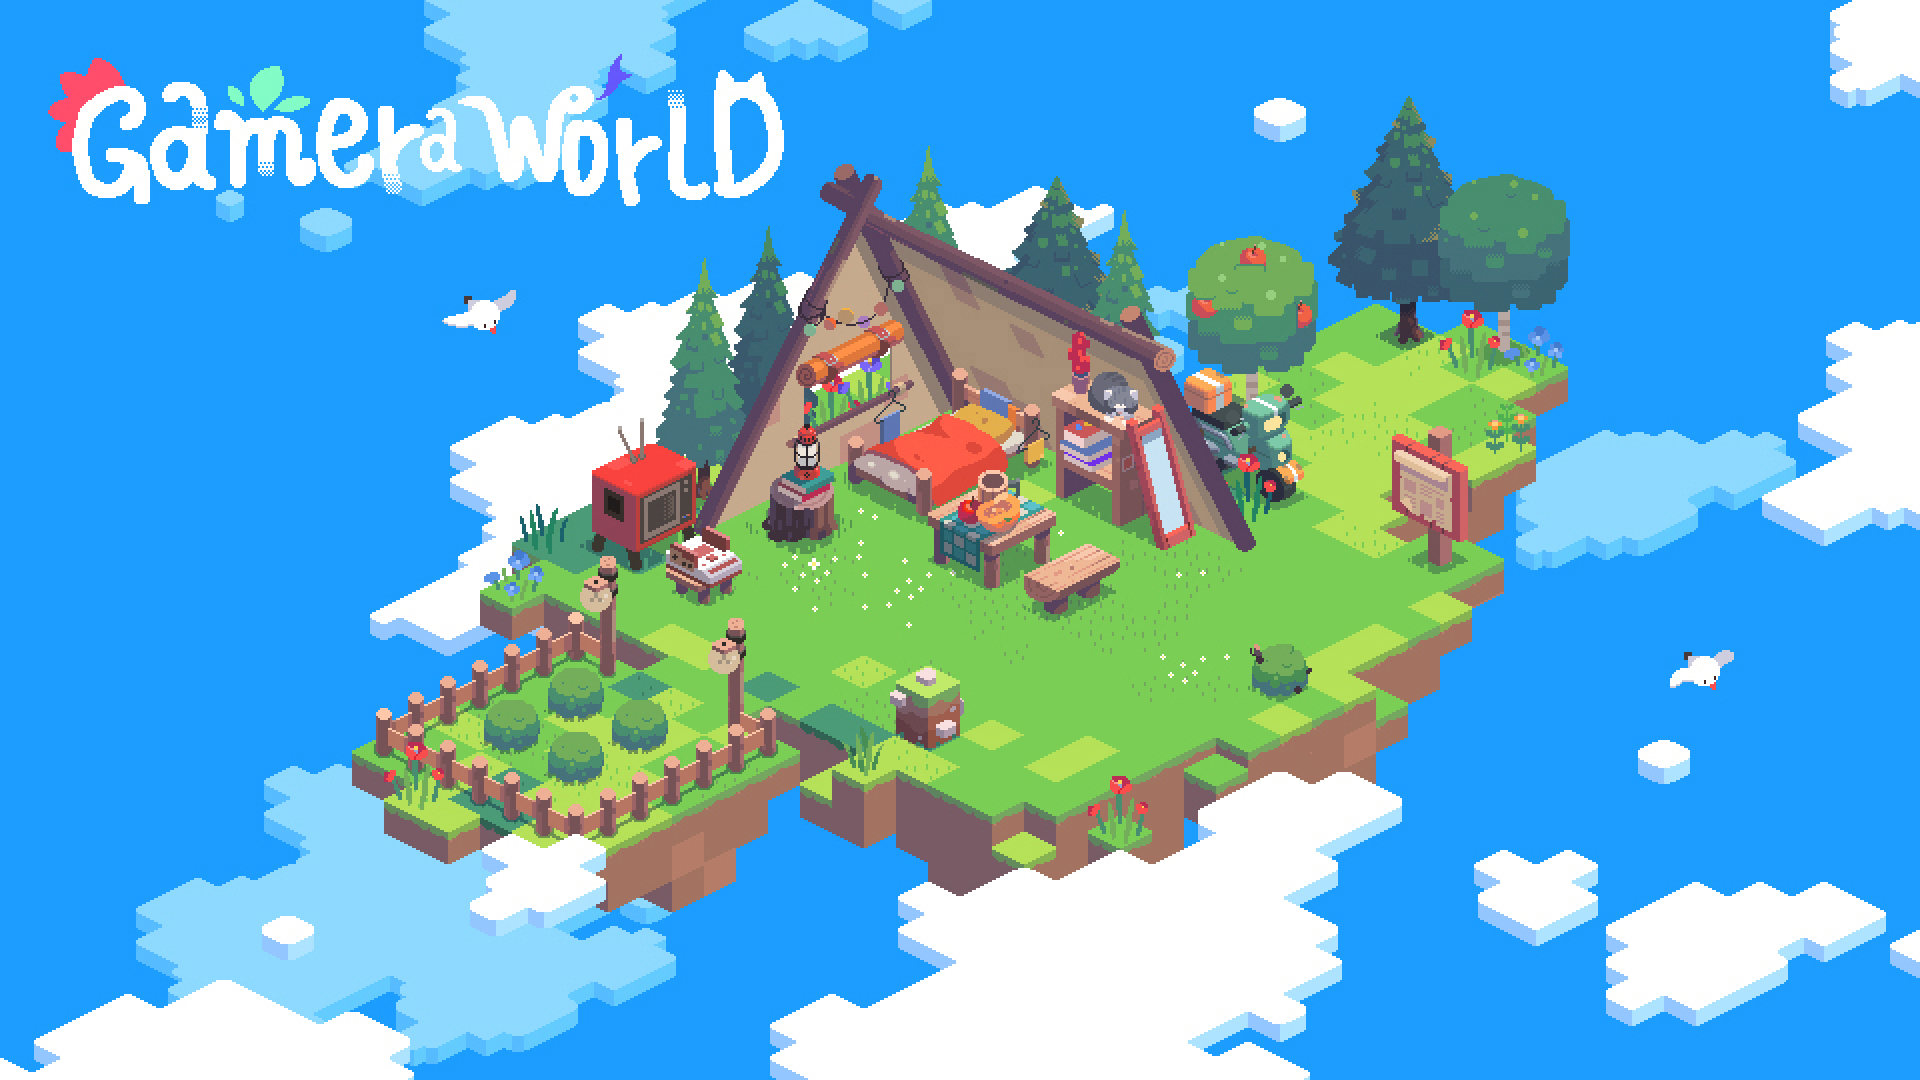 Gamera公布休闲游戏化社区《GamerAworlD》 邀您共享闲暇时光 二次世界 第2张